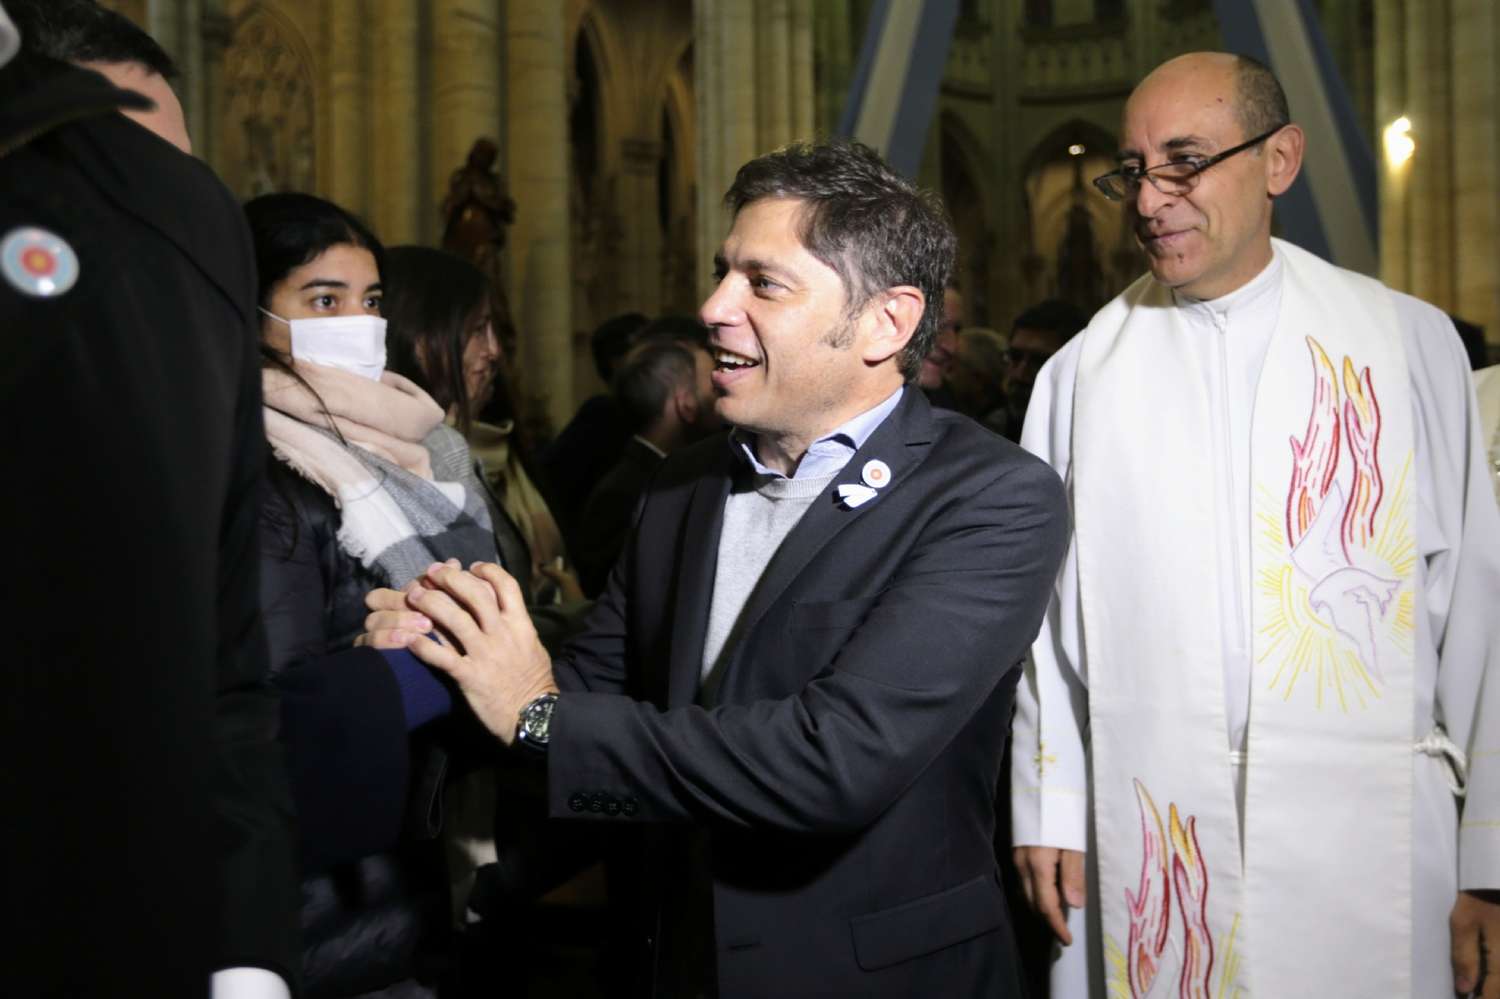 Qué intendentes bonaerenses participarán del homenaje "sin grieta" al Papa Francisco en la catedral de La Plata